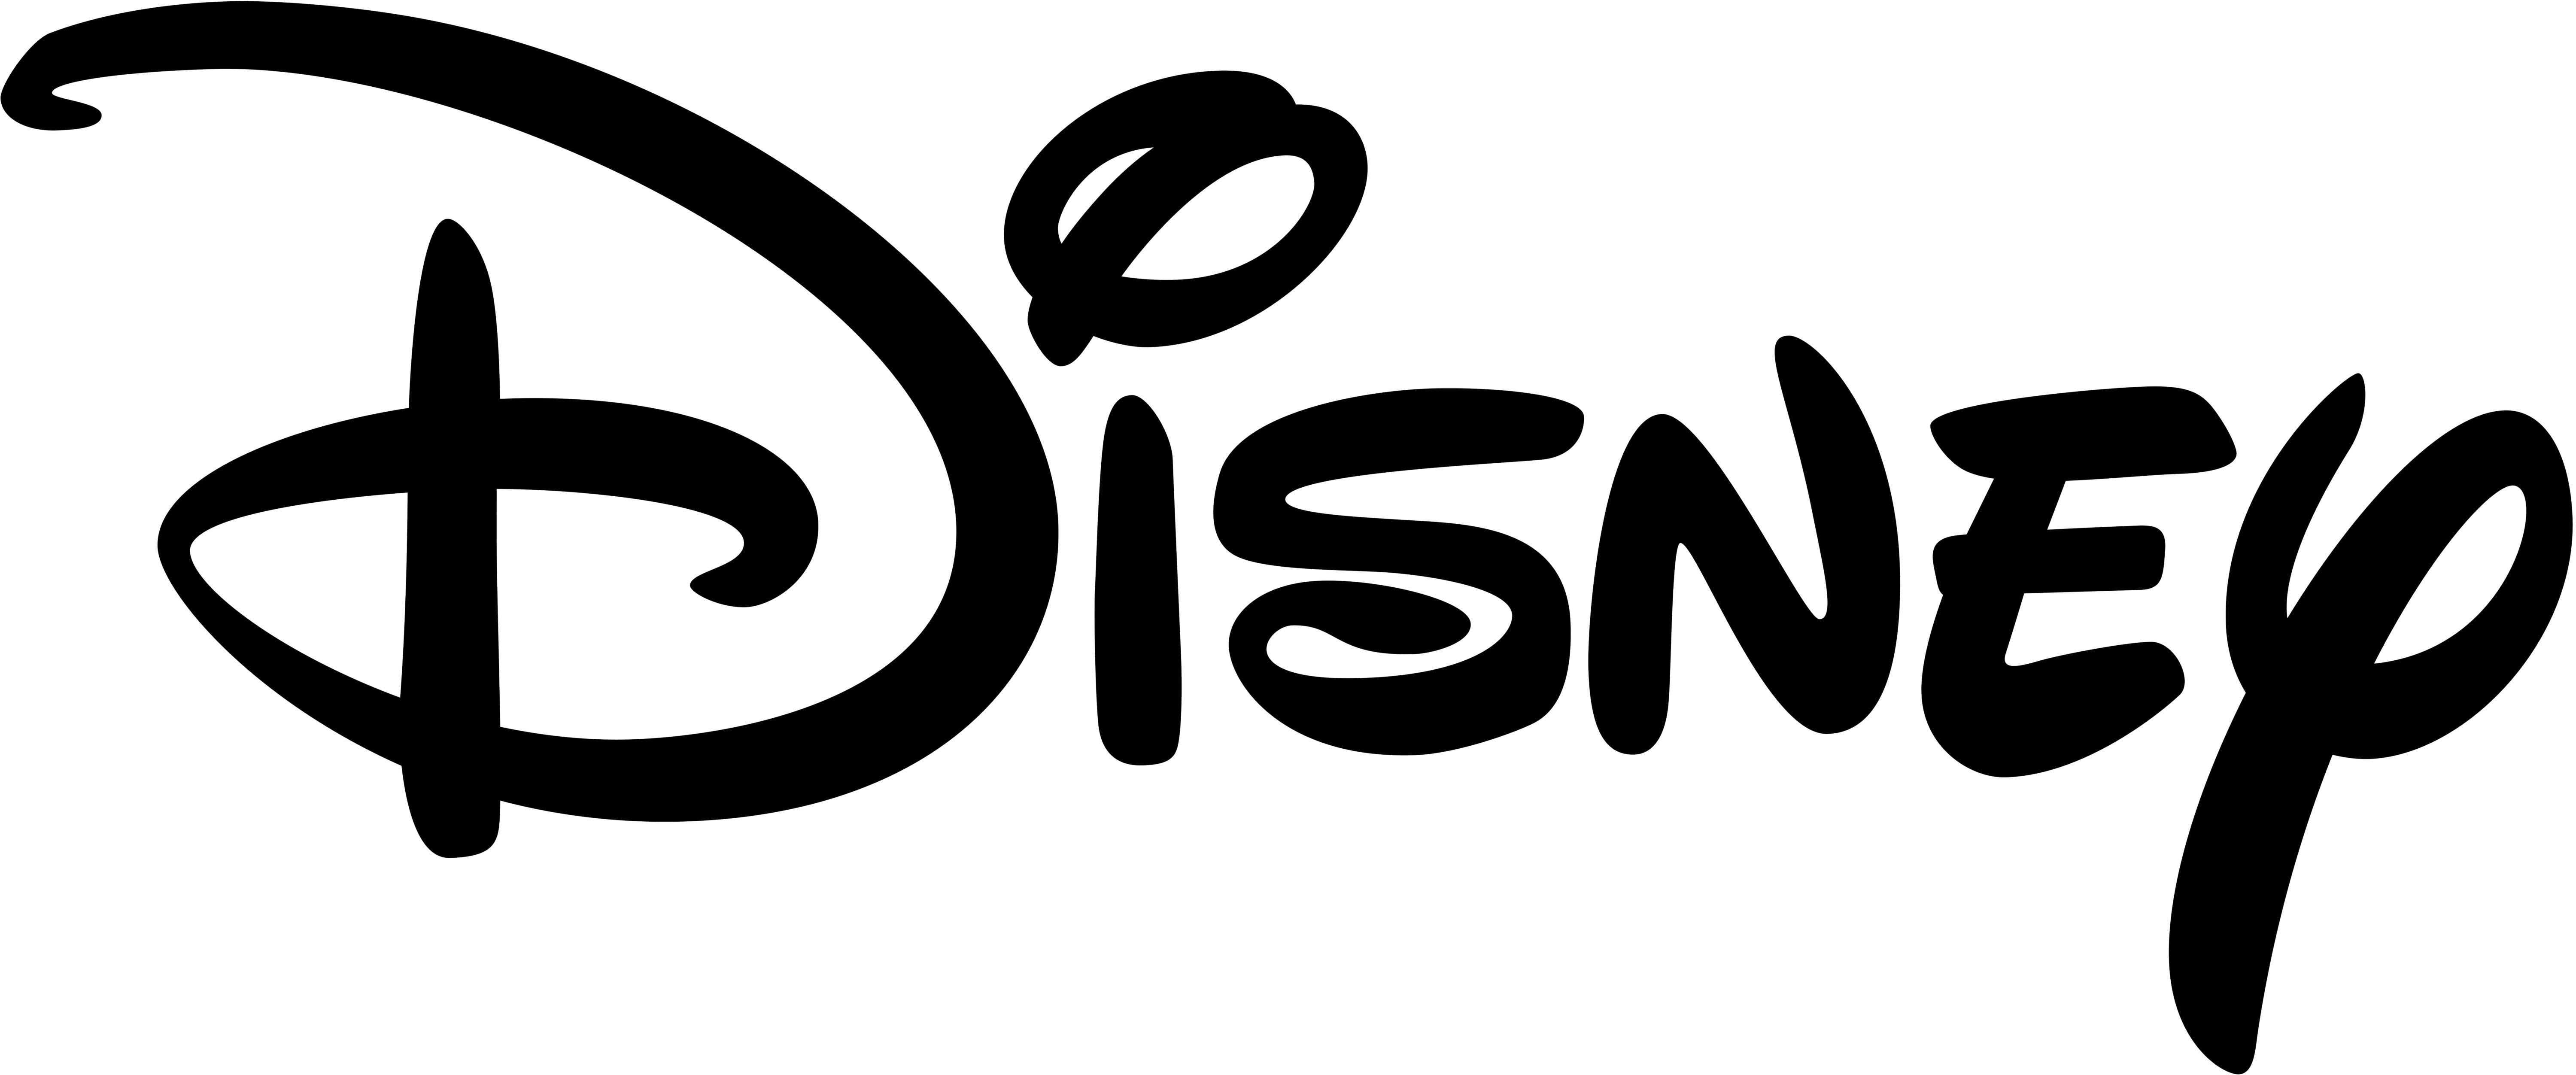 Maker Studios Logo - Disney Is Scaling Down On Digital Media Team, Maker Studios | Video ...